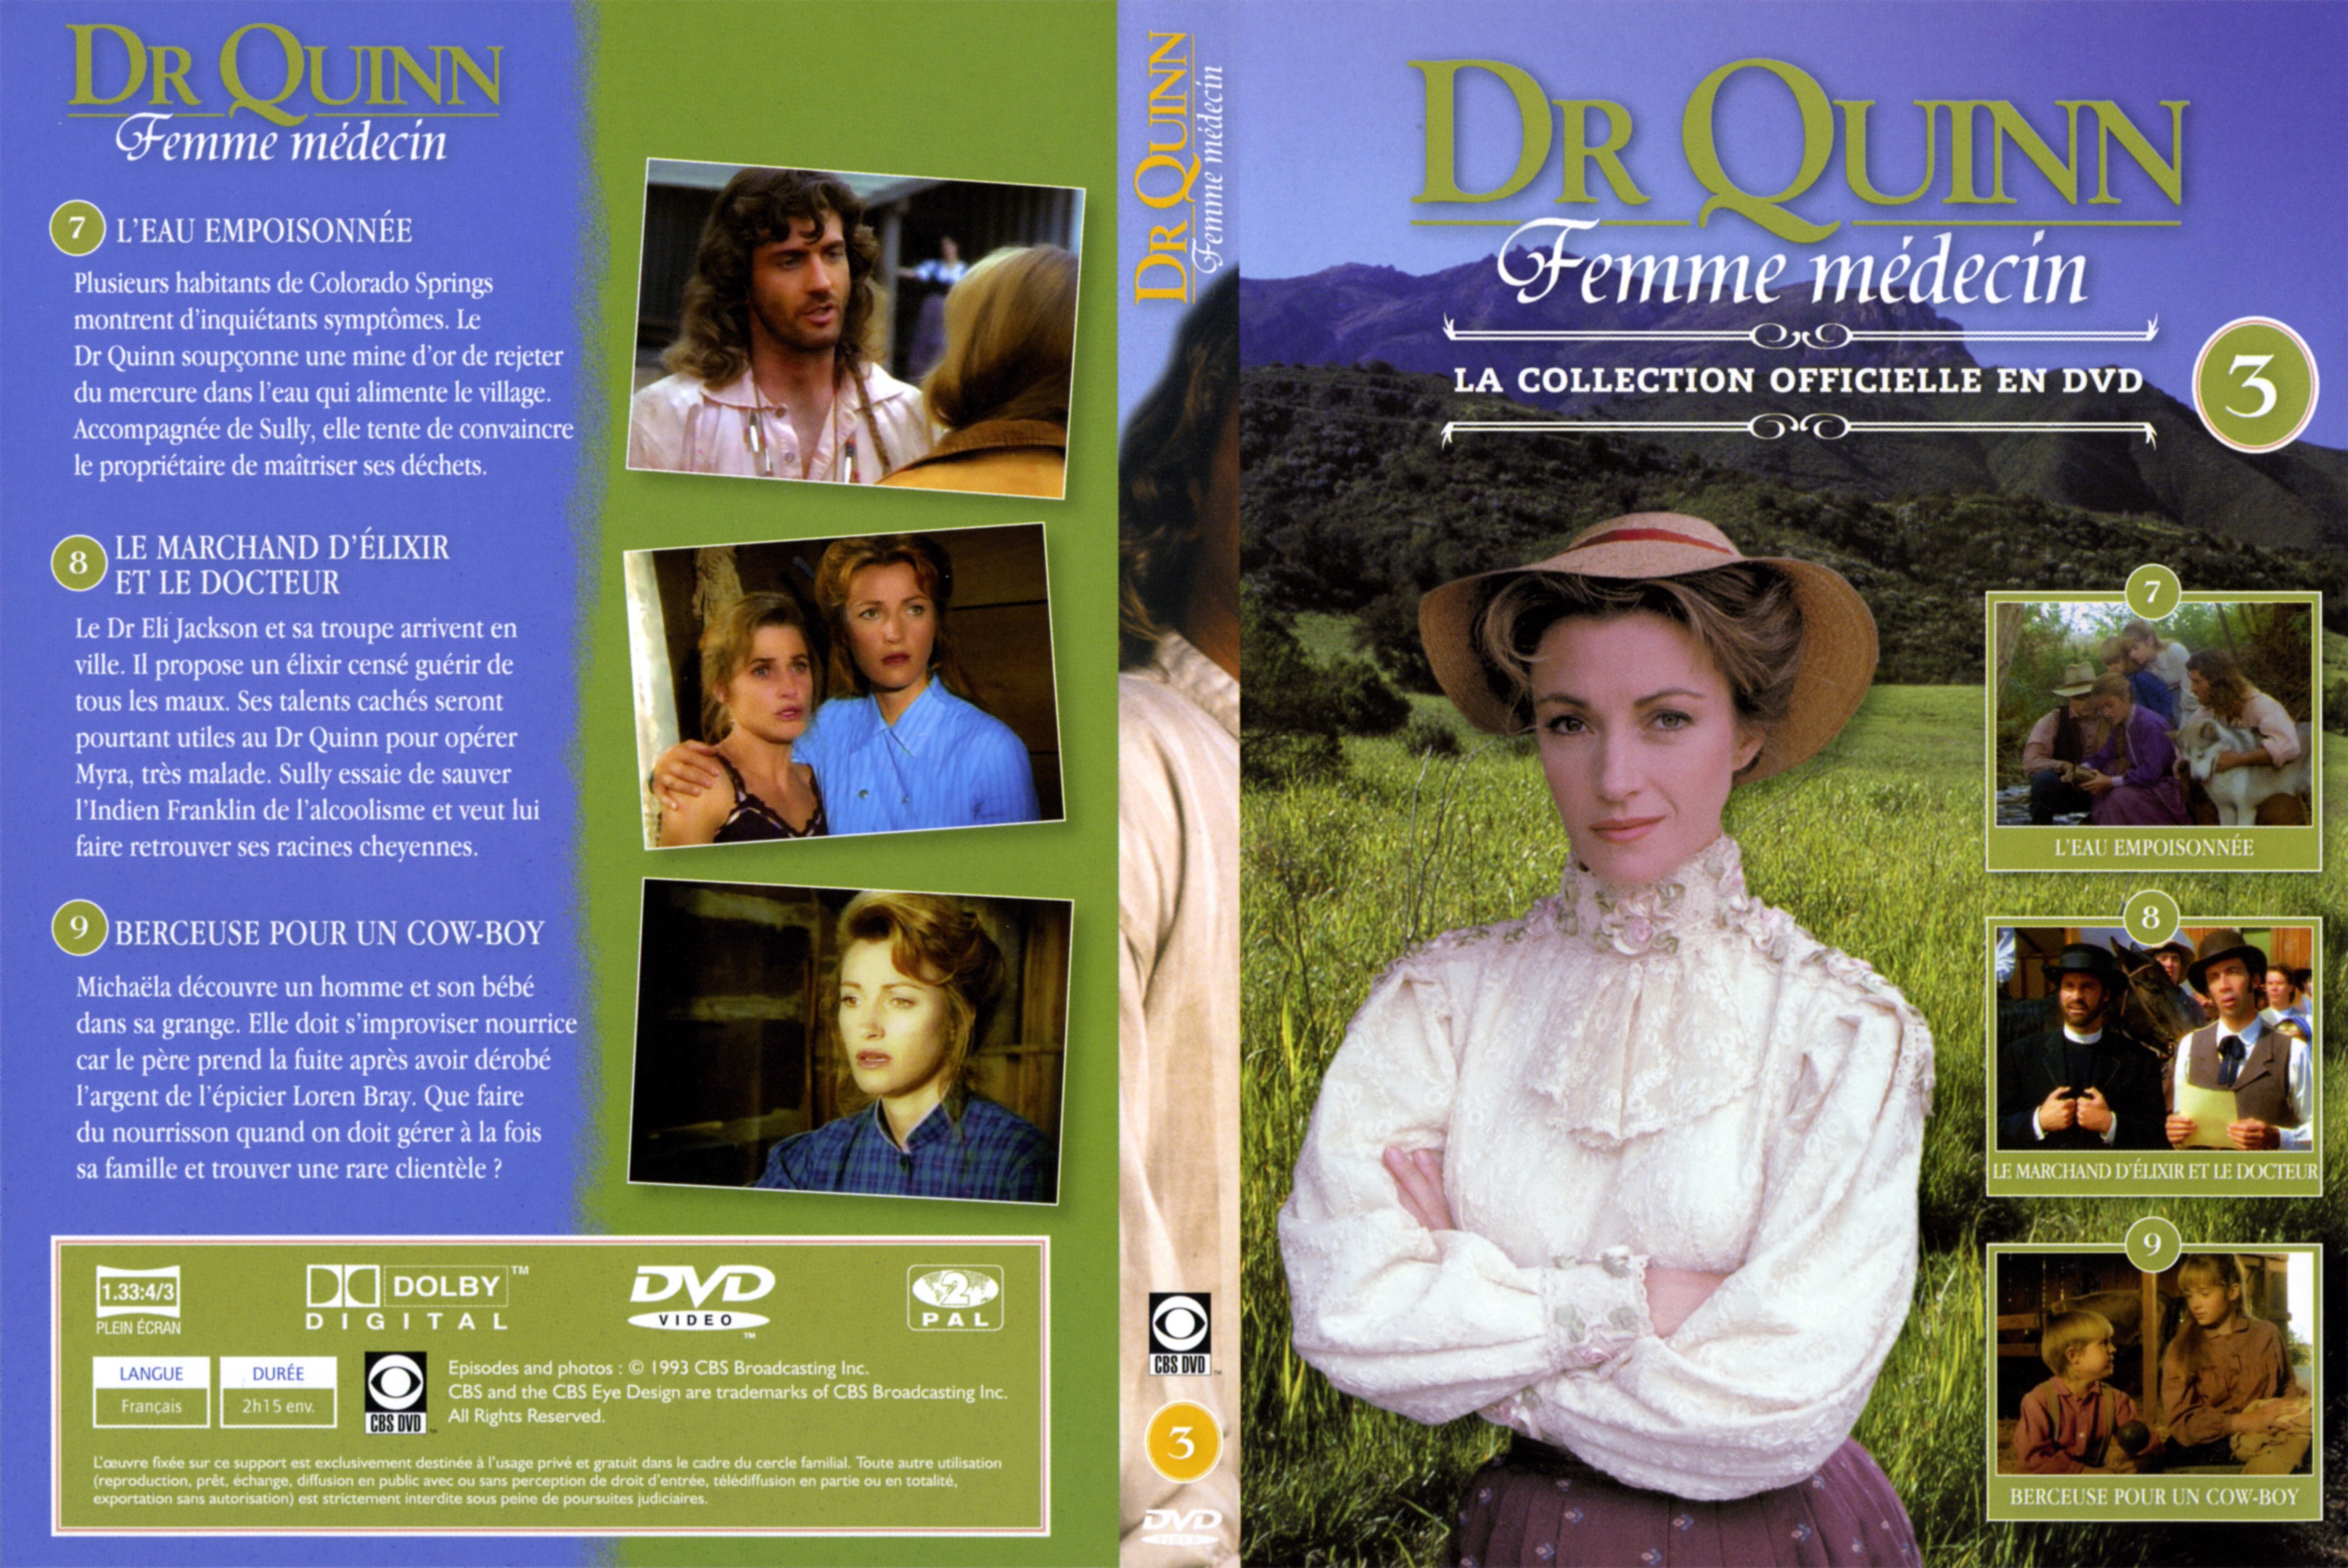 Jaquette DVD Dr Quinn femme medecin vol 3